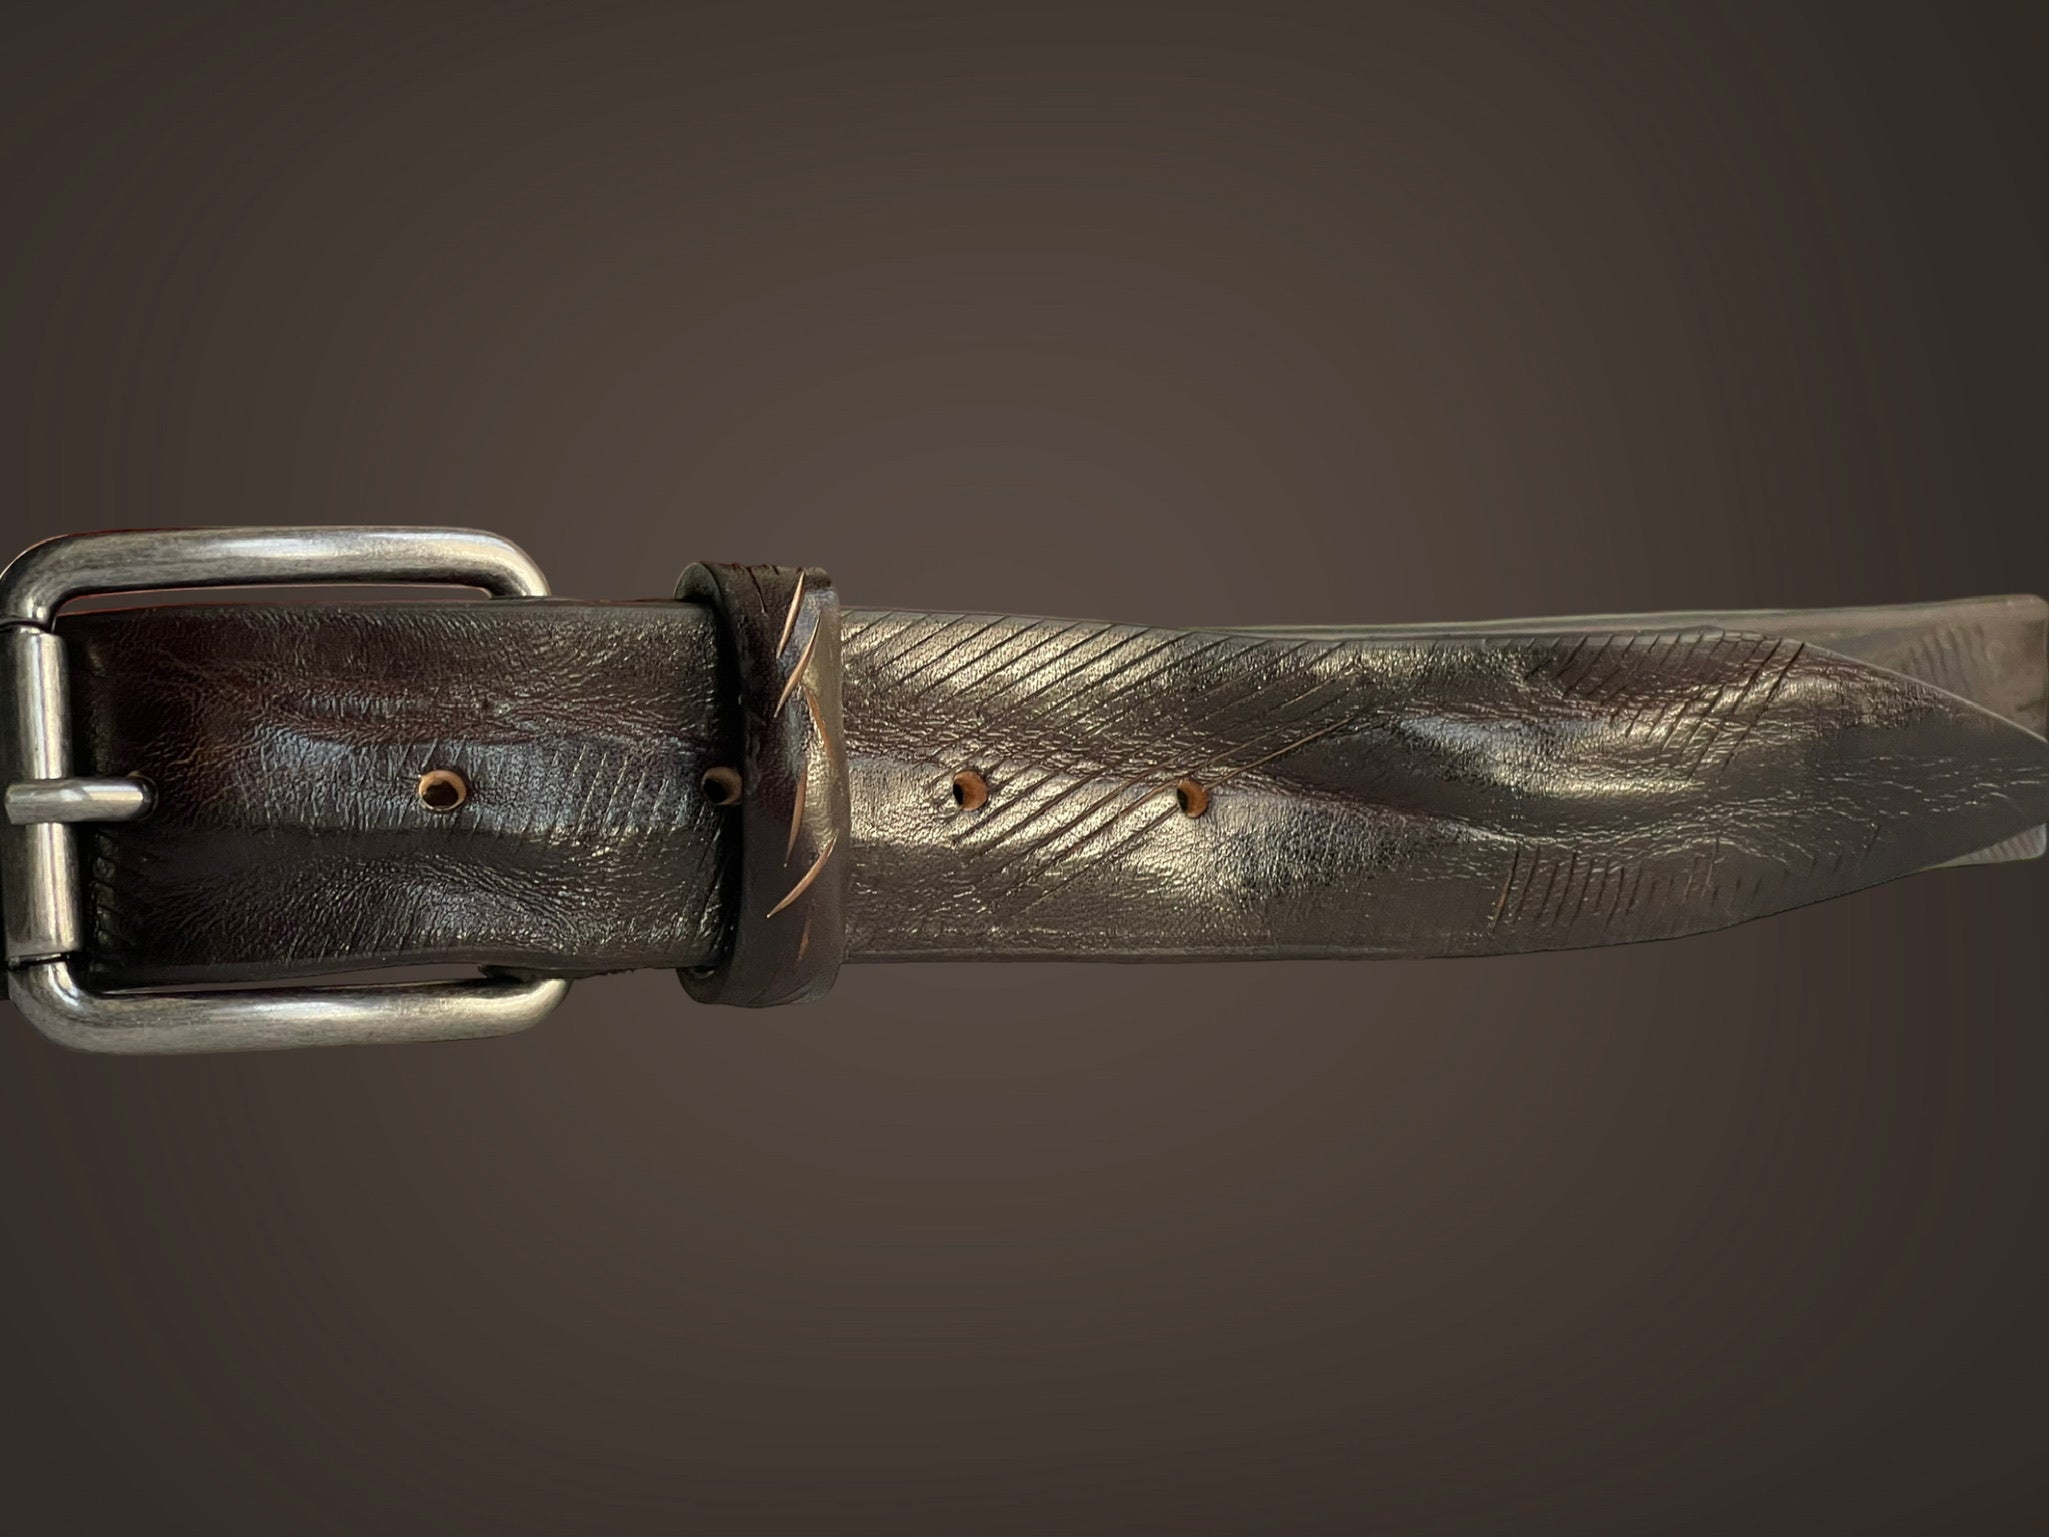 Cintura 035mm stropicciata a mano con aggiunta di stampo a graffi